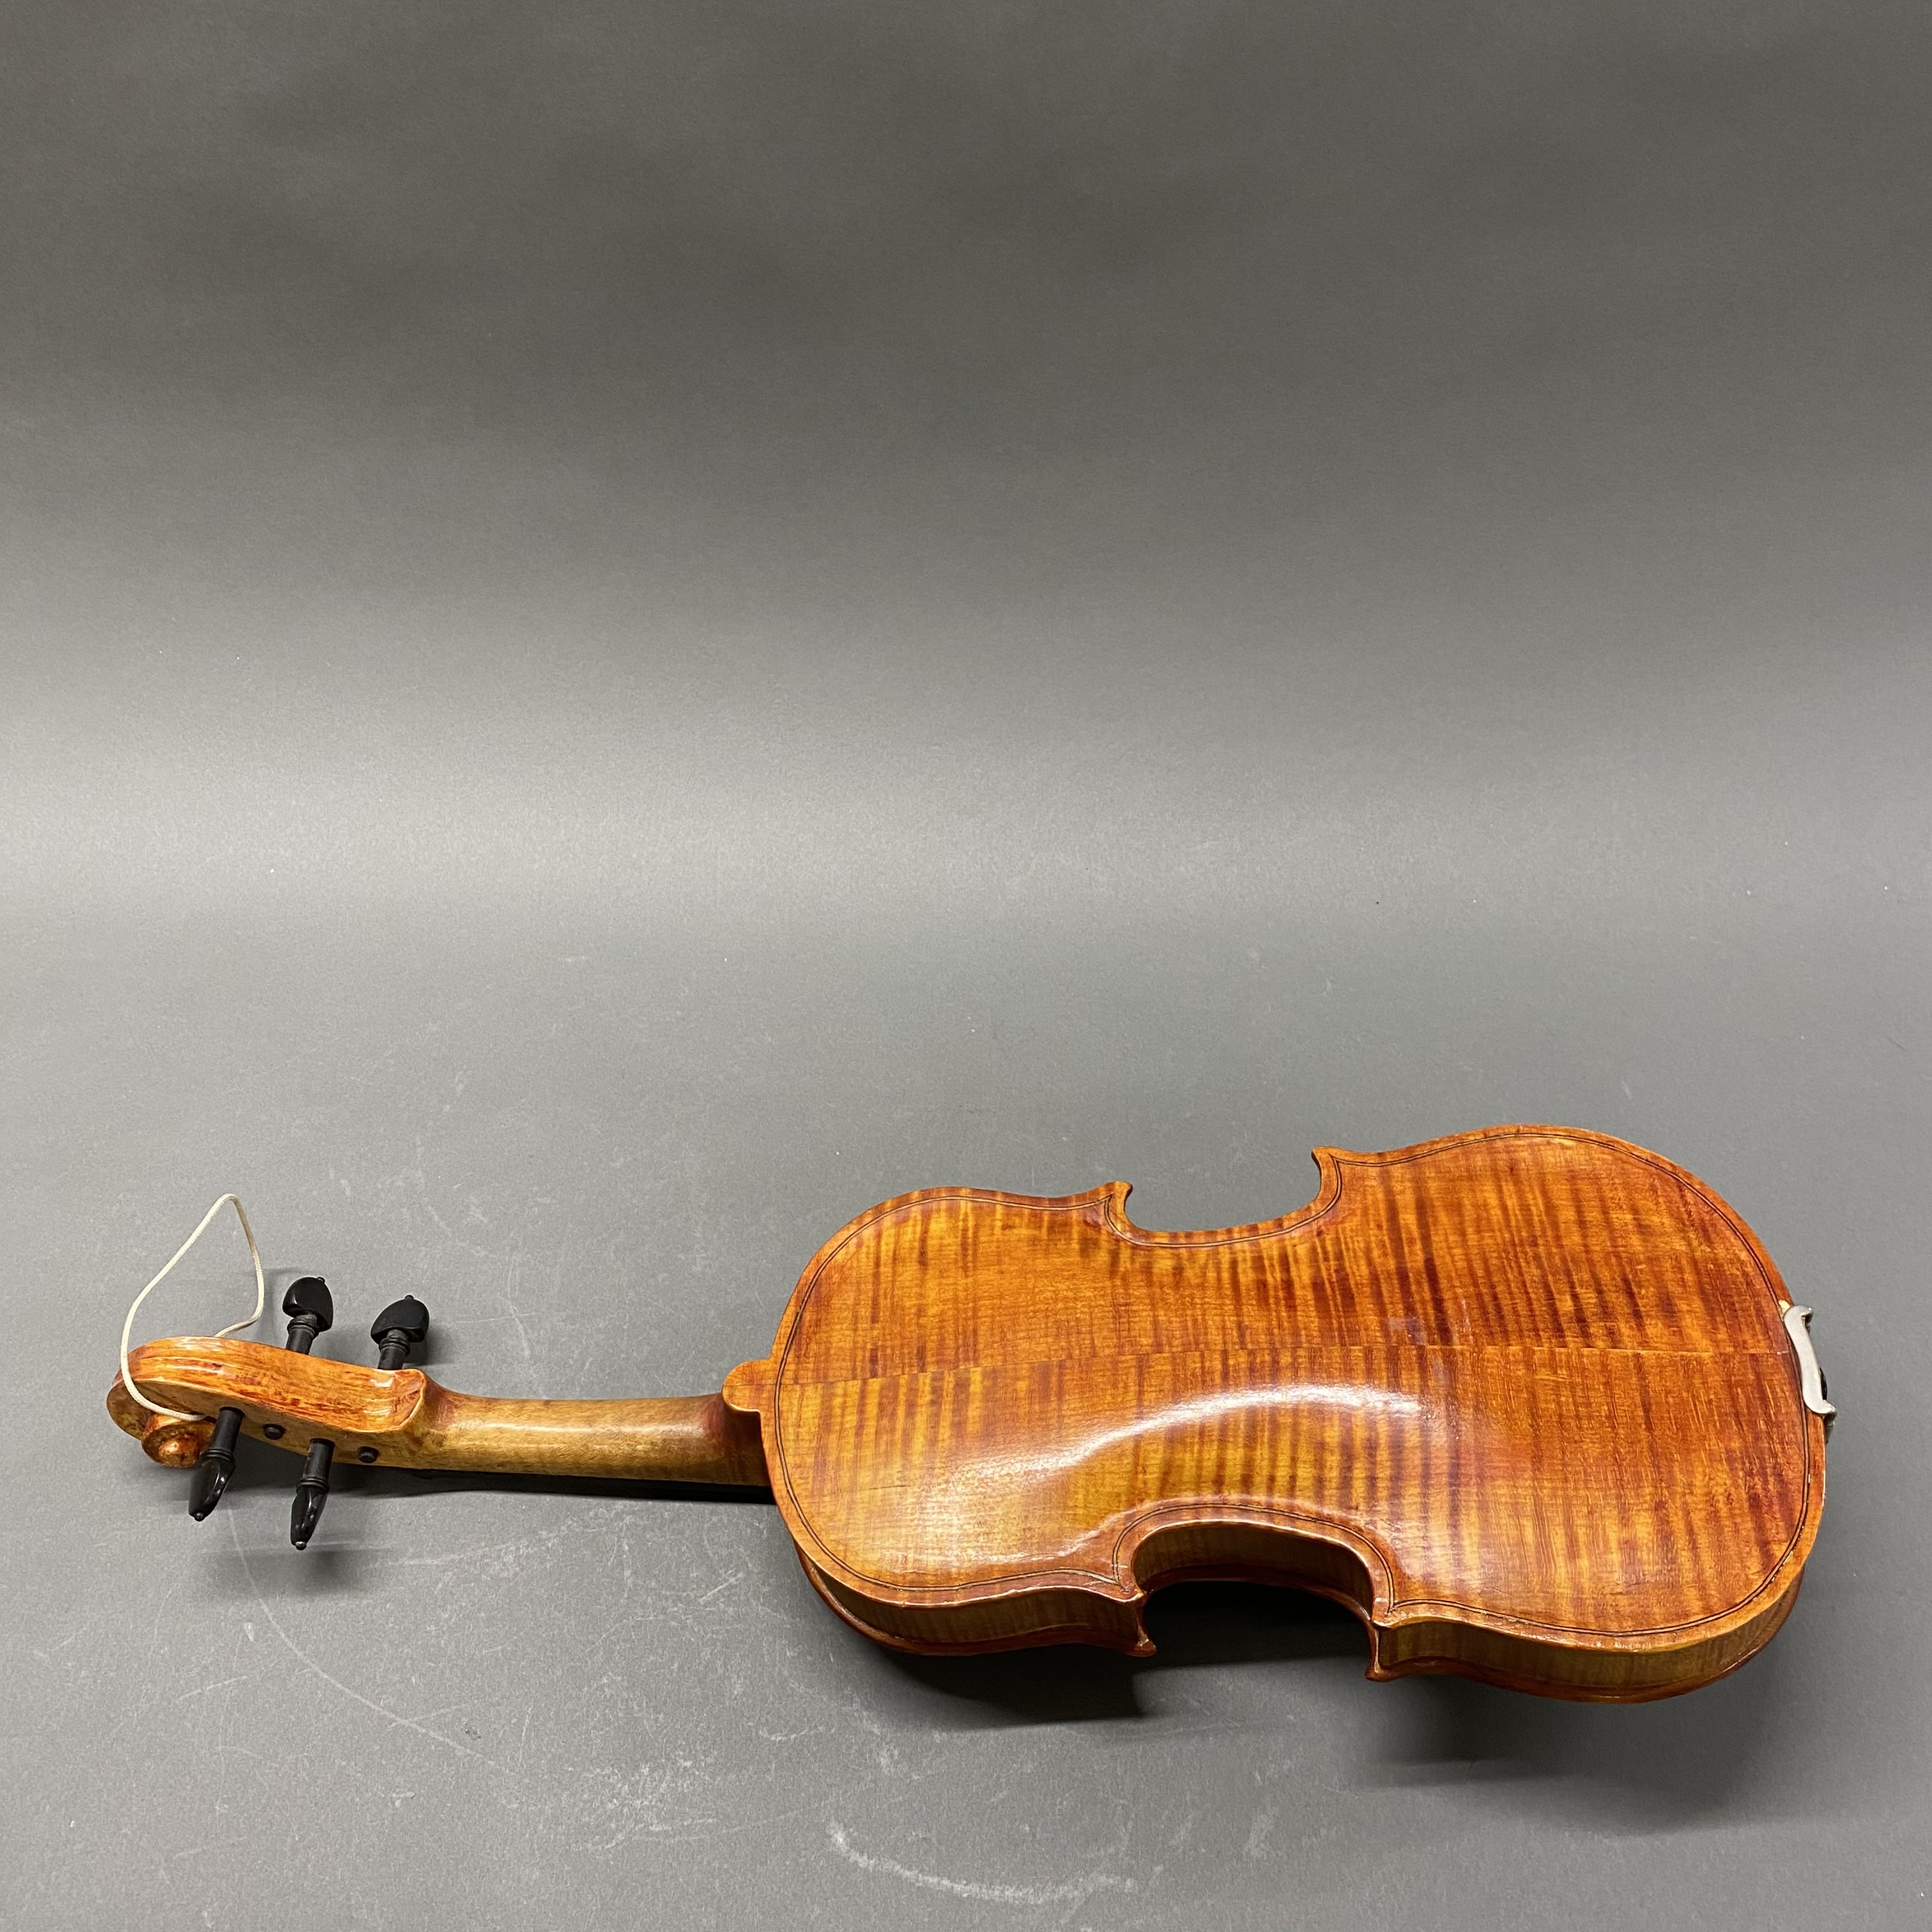 A handmade violin. - Image 3 of 4